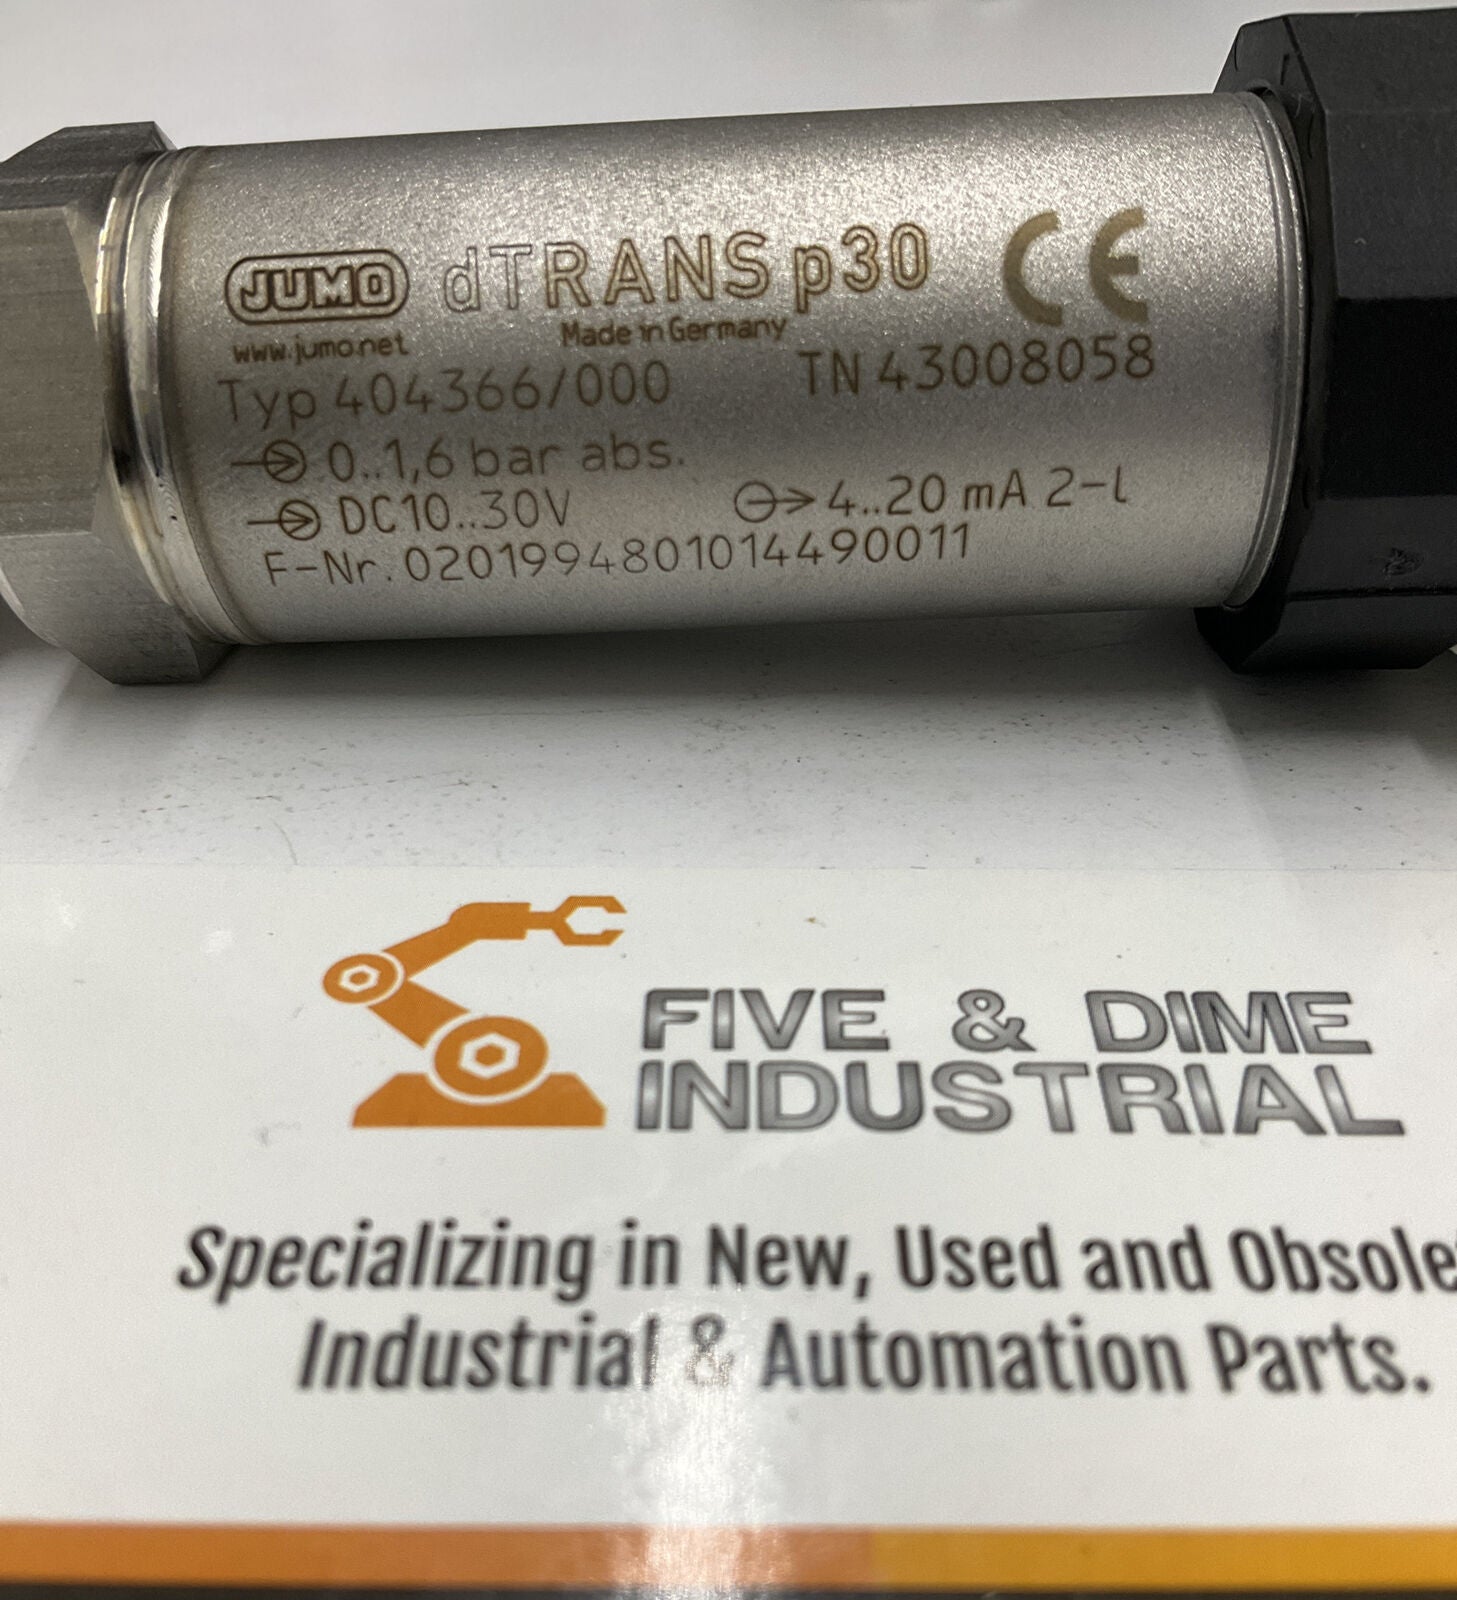 JUMO dTrans 404366/000  Pressure Transducer  0..1,6 bar abs 10..30VDC (CL158)